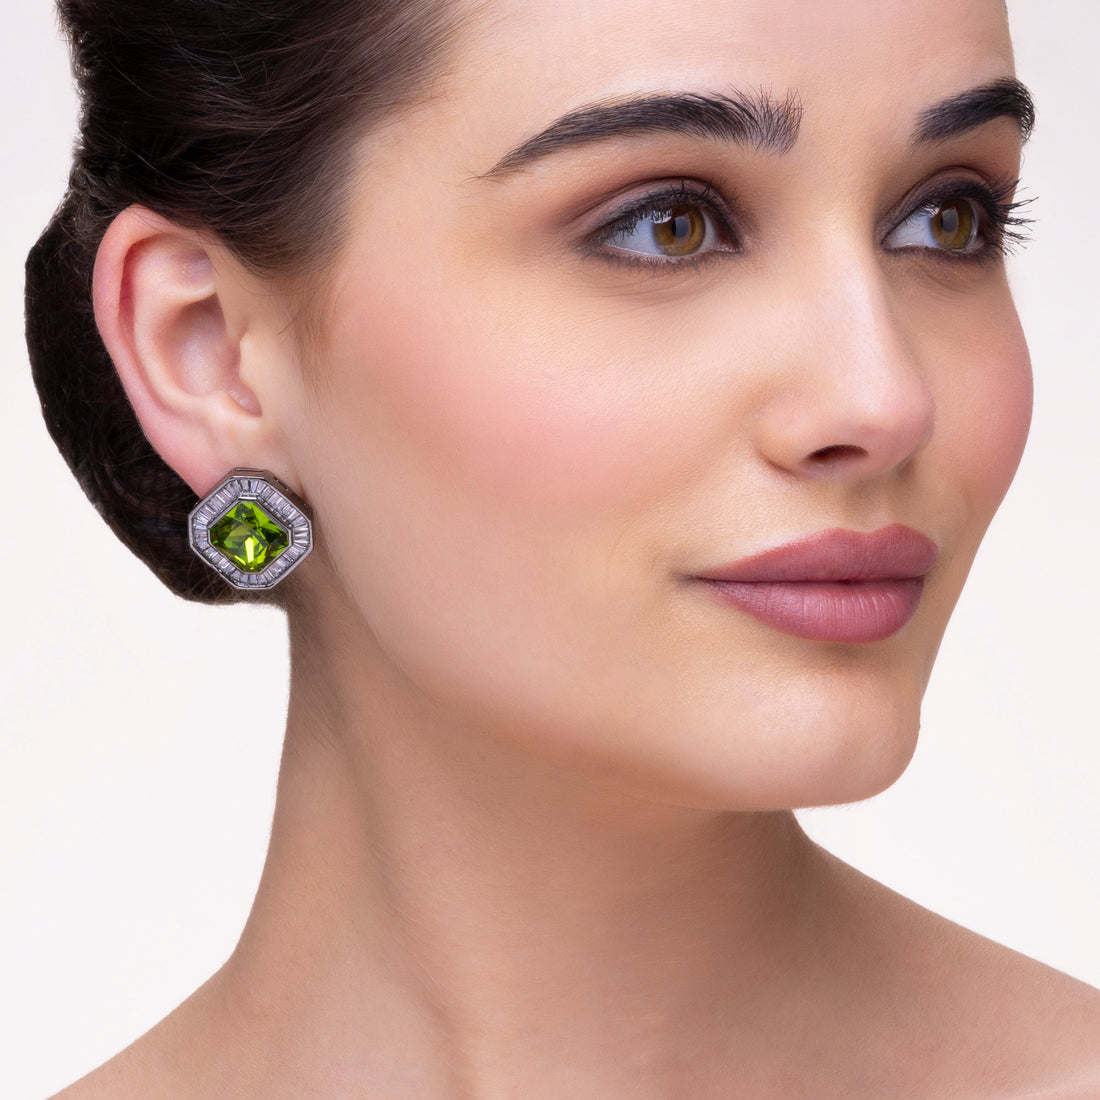 PRAO's Exquisite Crystal Stud Earrings